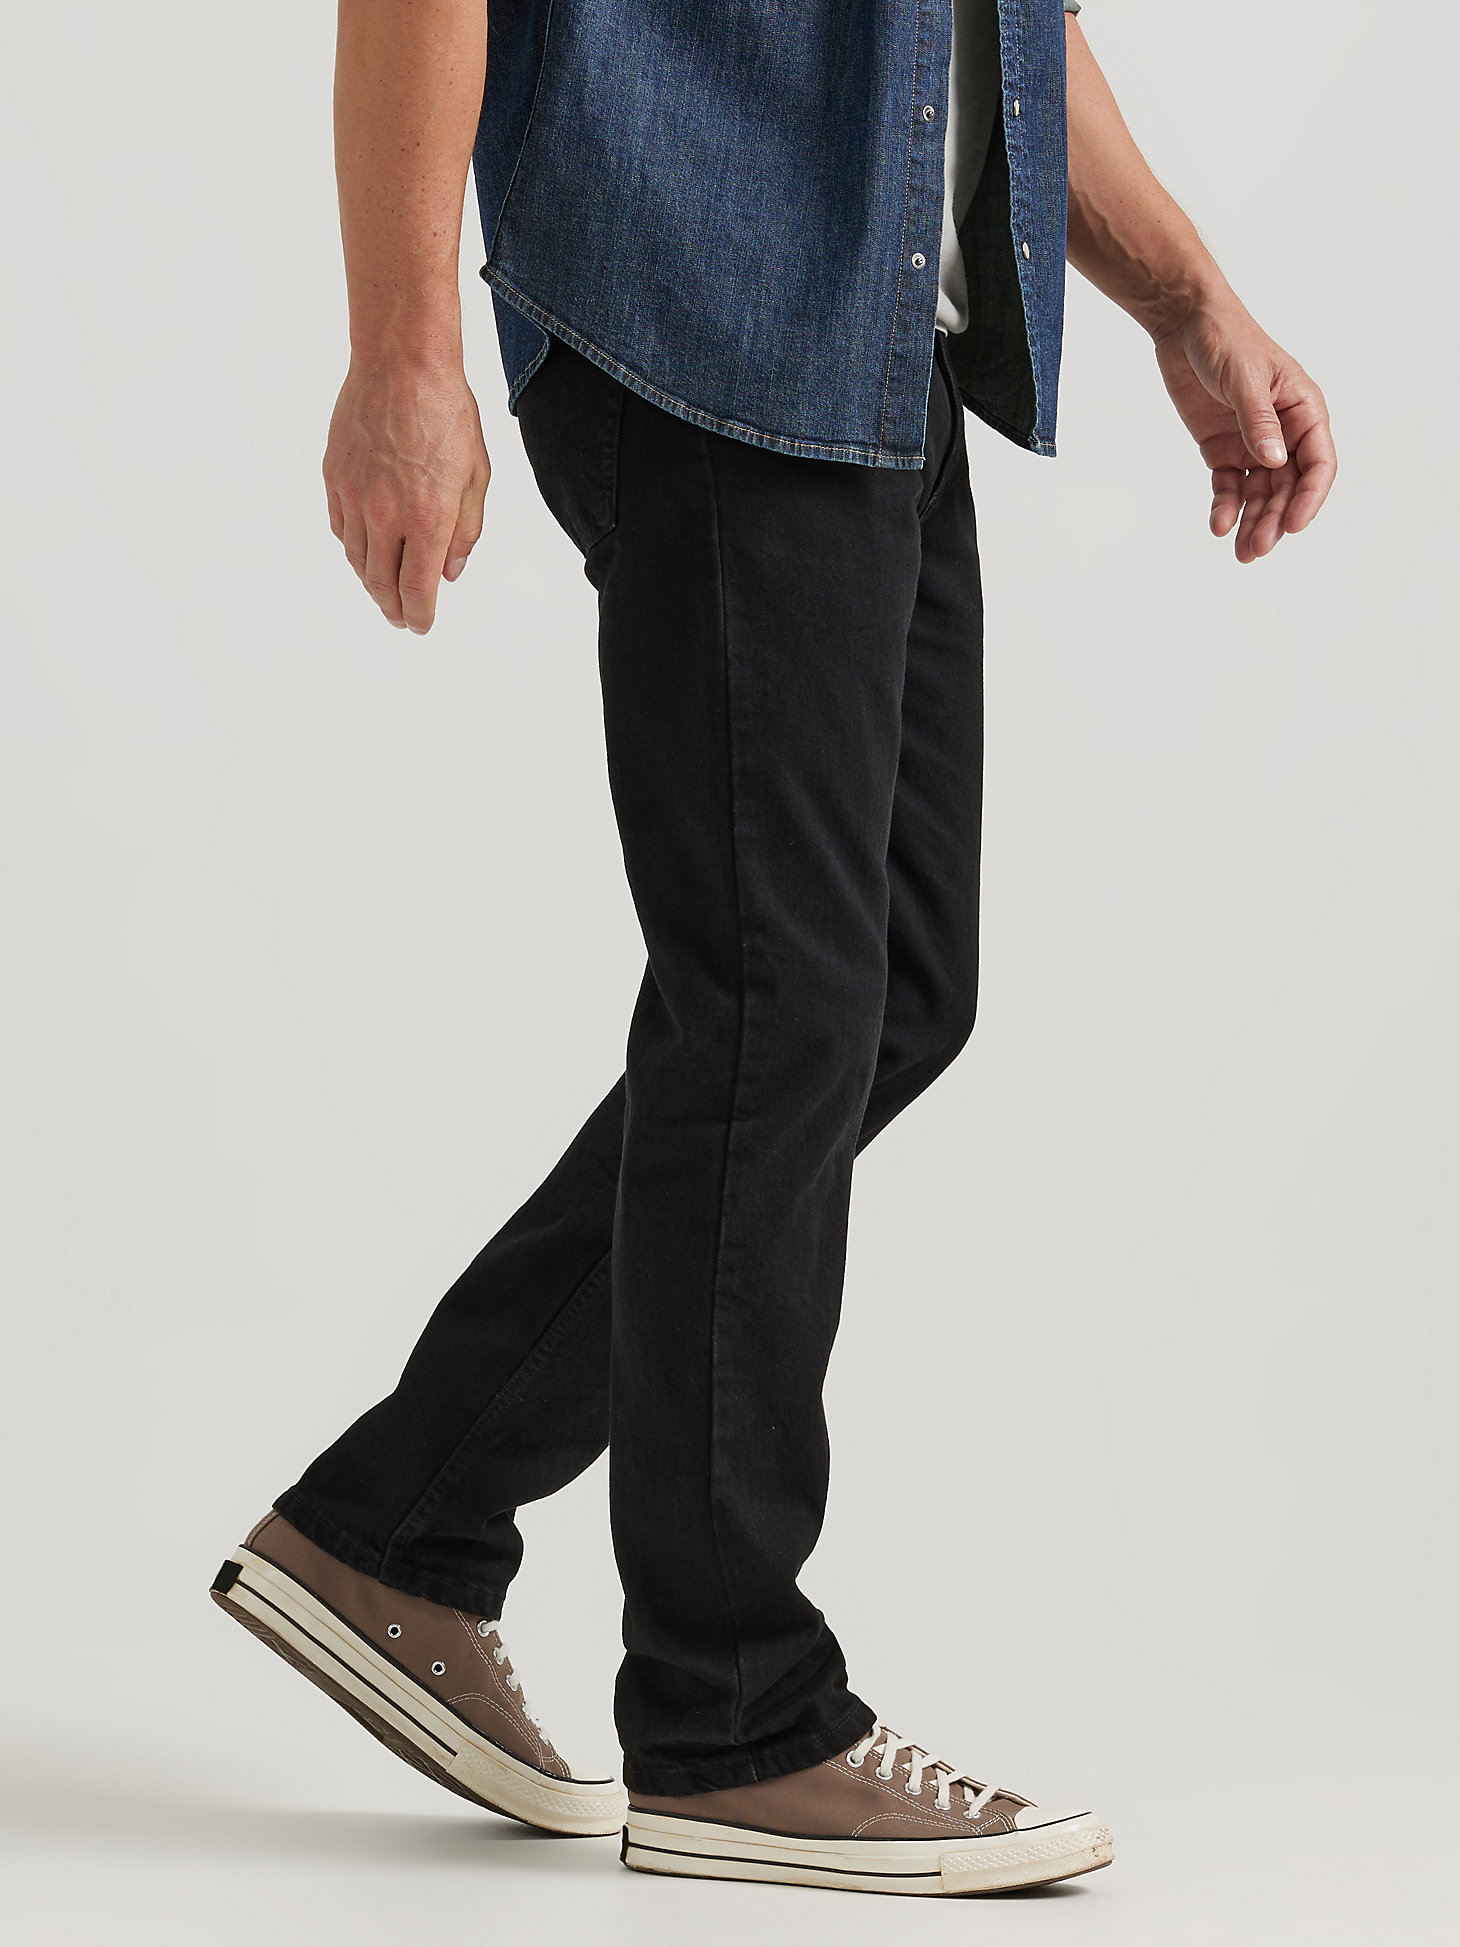 Wrangler® Five Star Premium Denim Regular Fit Jean in Coal Black alternative view 2